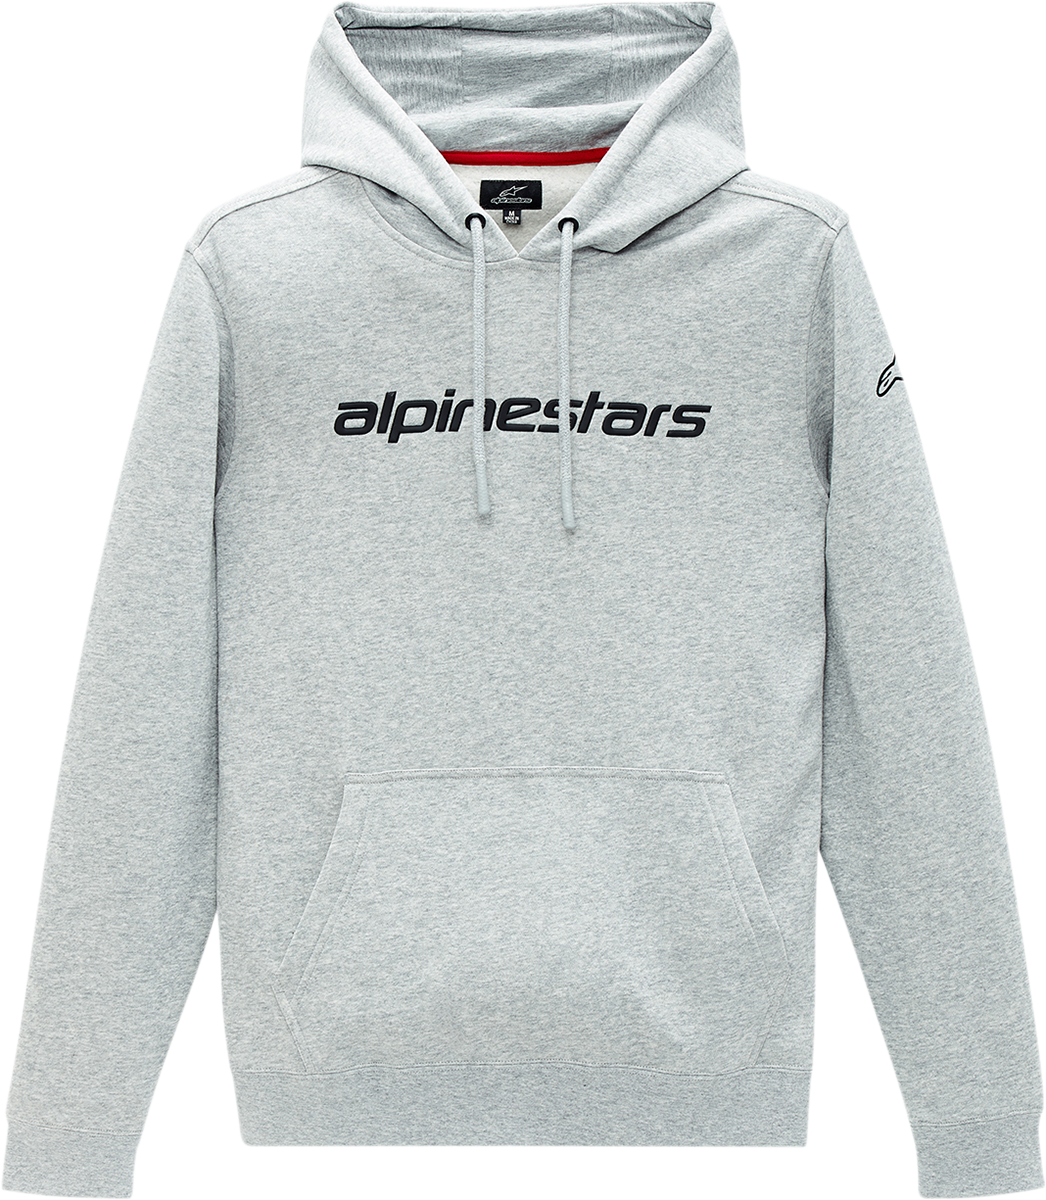 ALPINESTARS Linear Hoodie - Gray - Large 1213516701026L